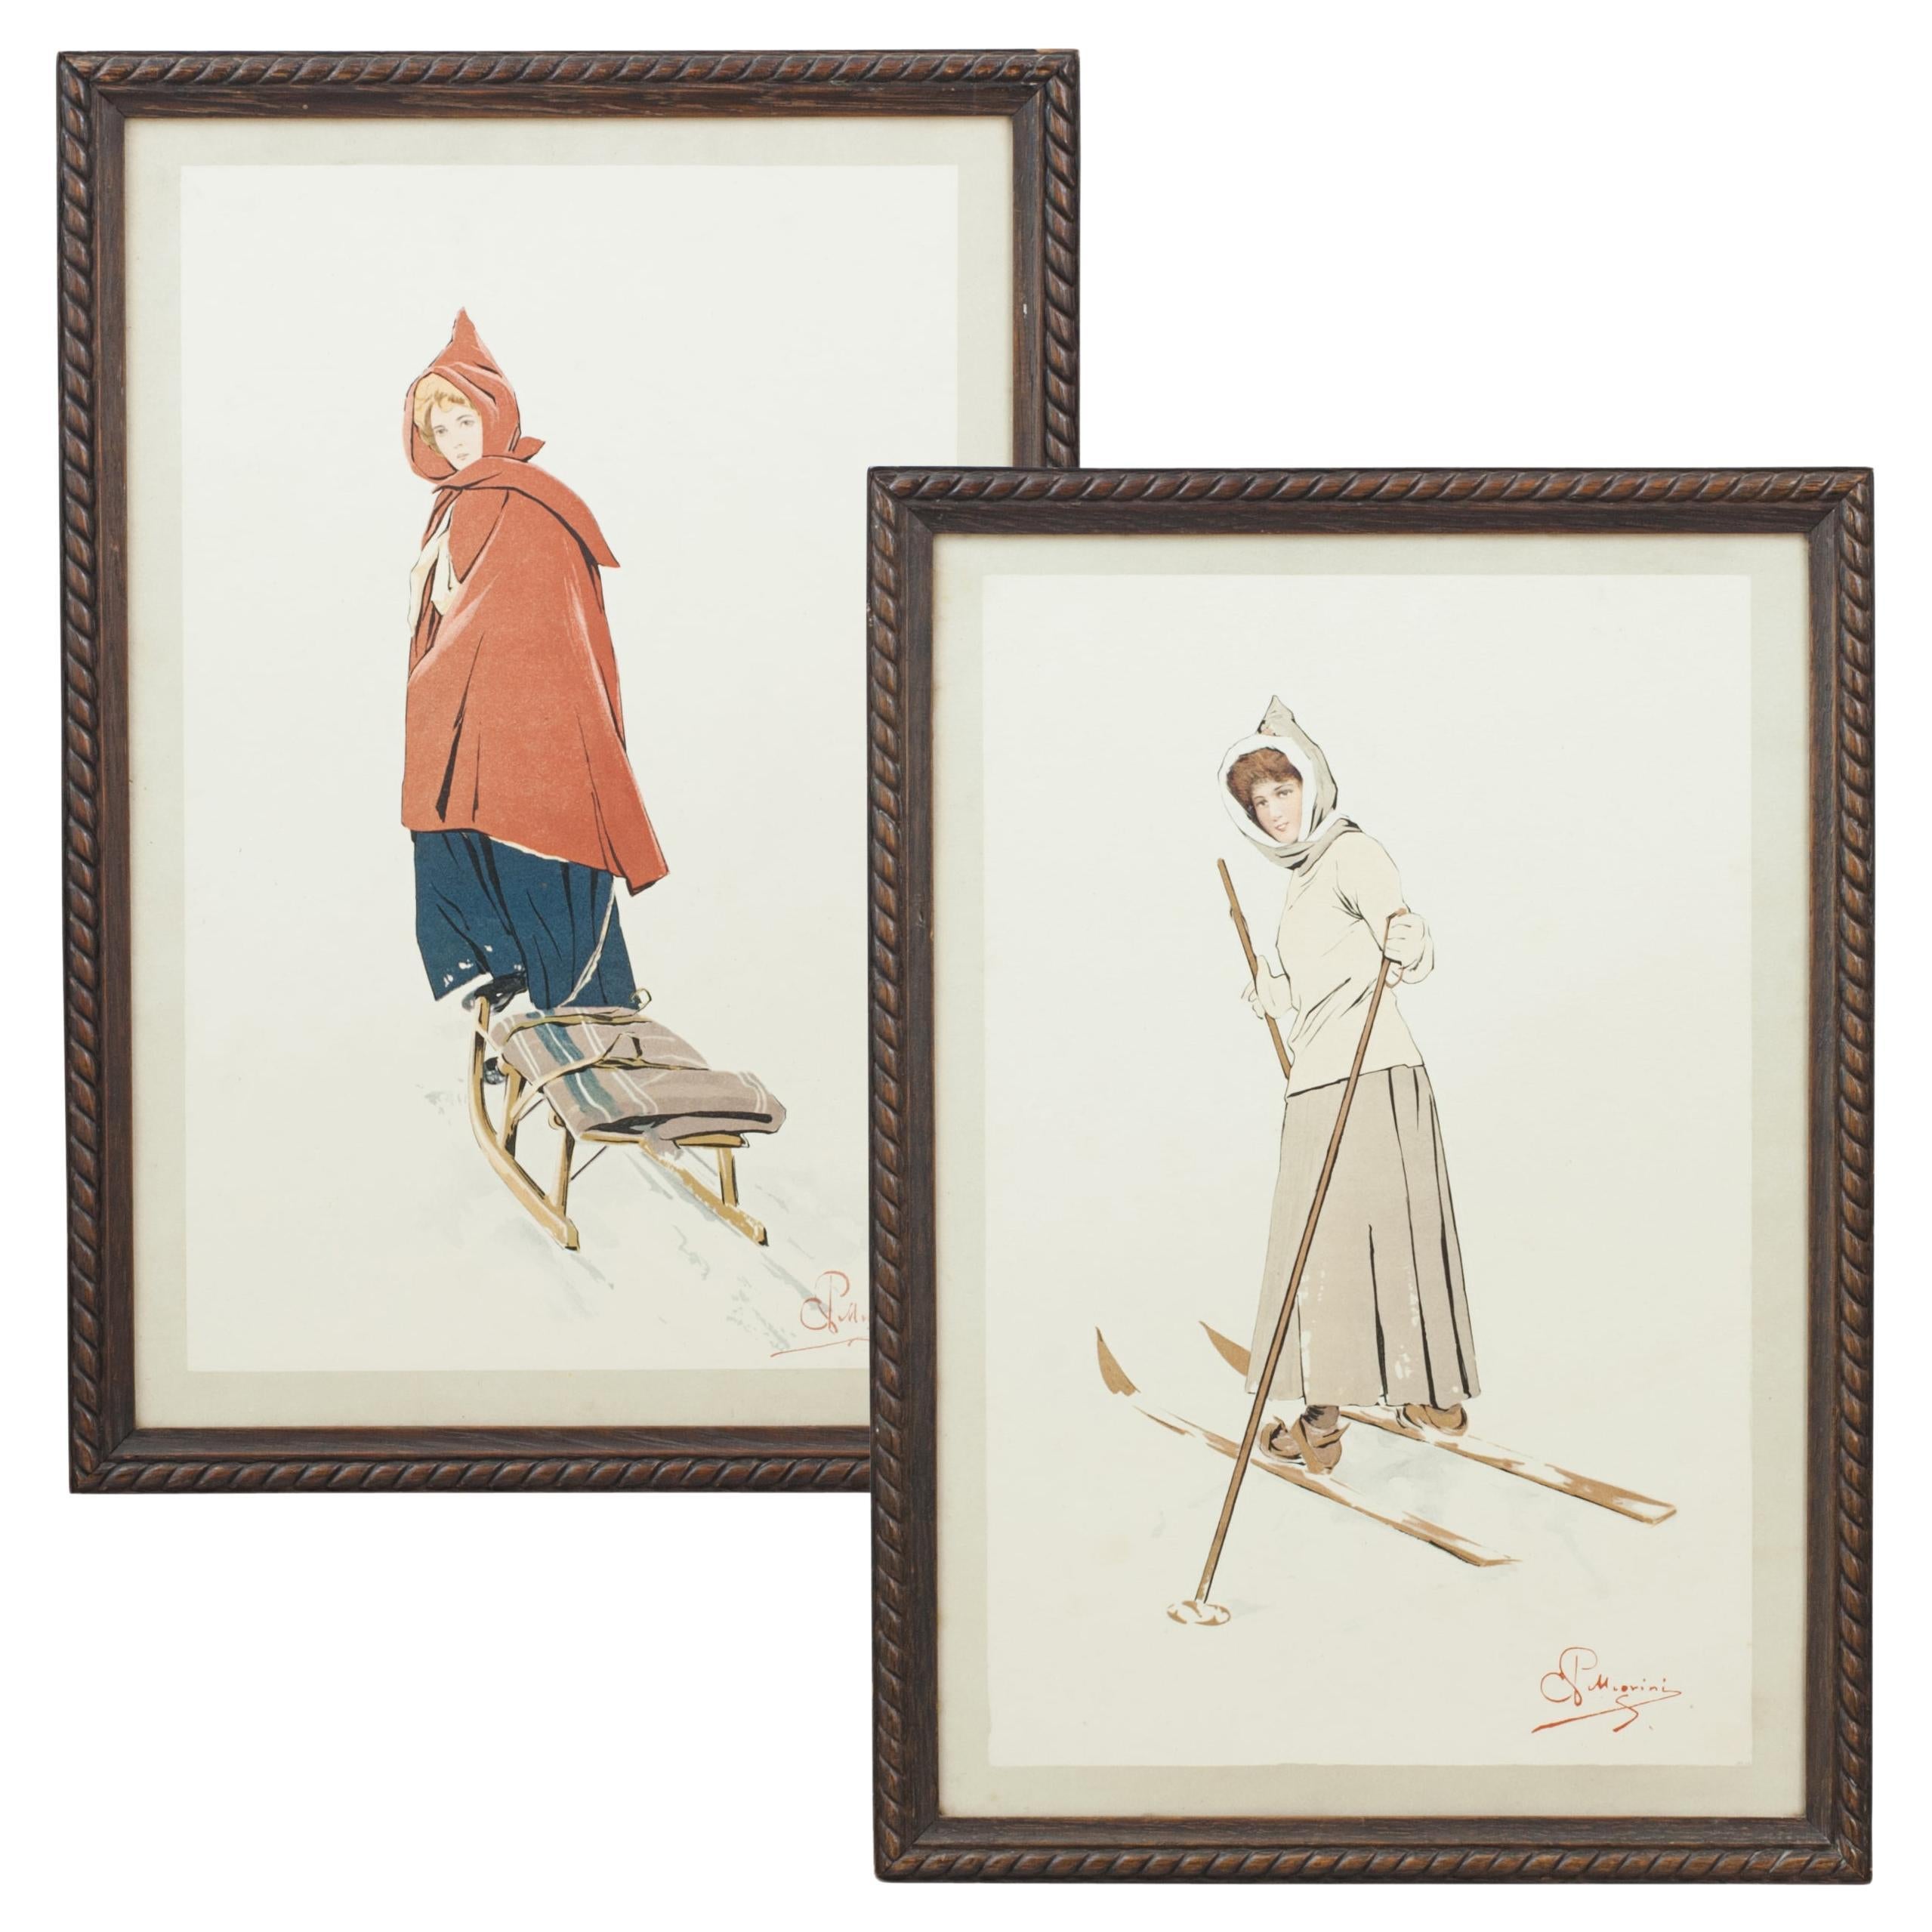 Pair of Pellegrini Winter Sport Prints, Tobogganing and Skiing.